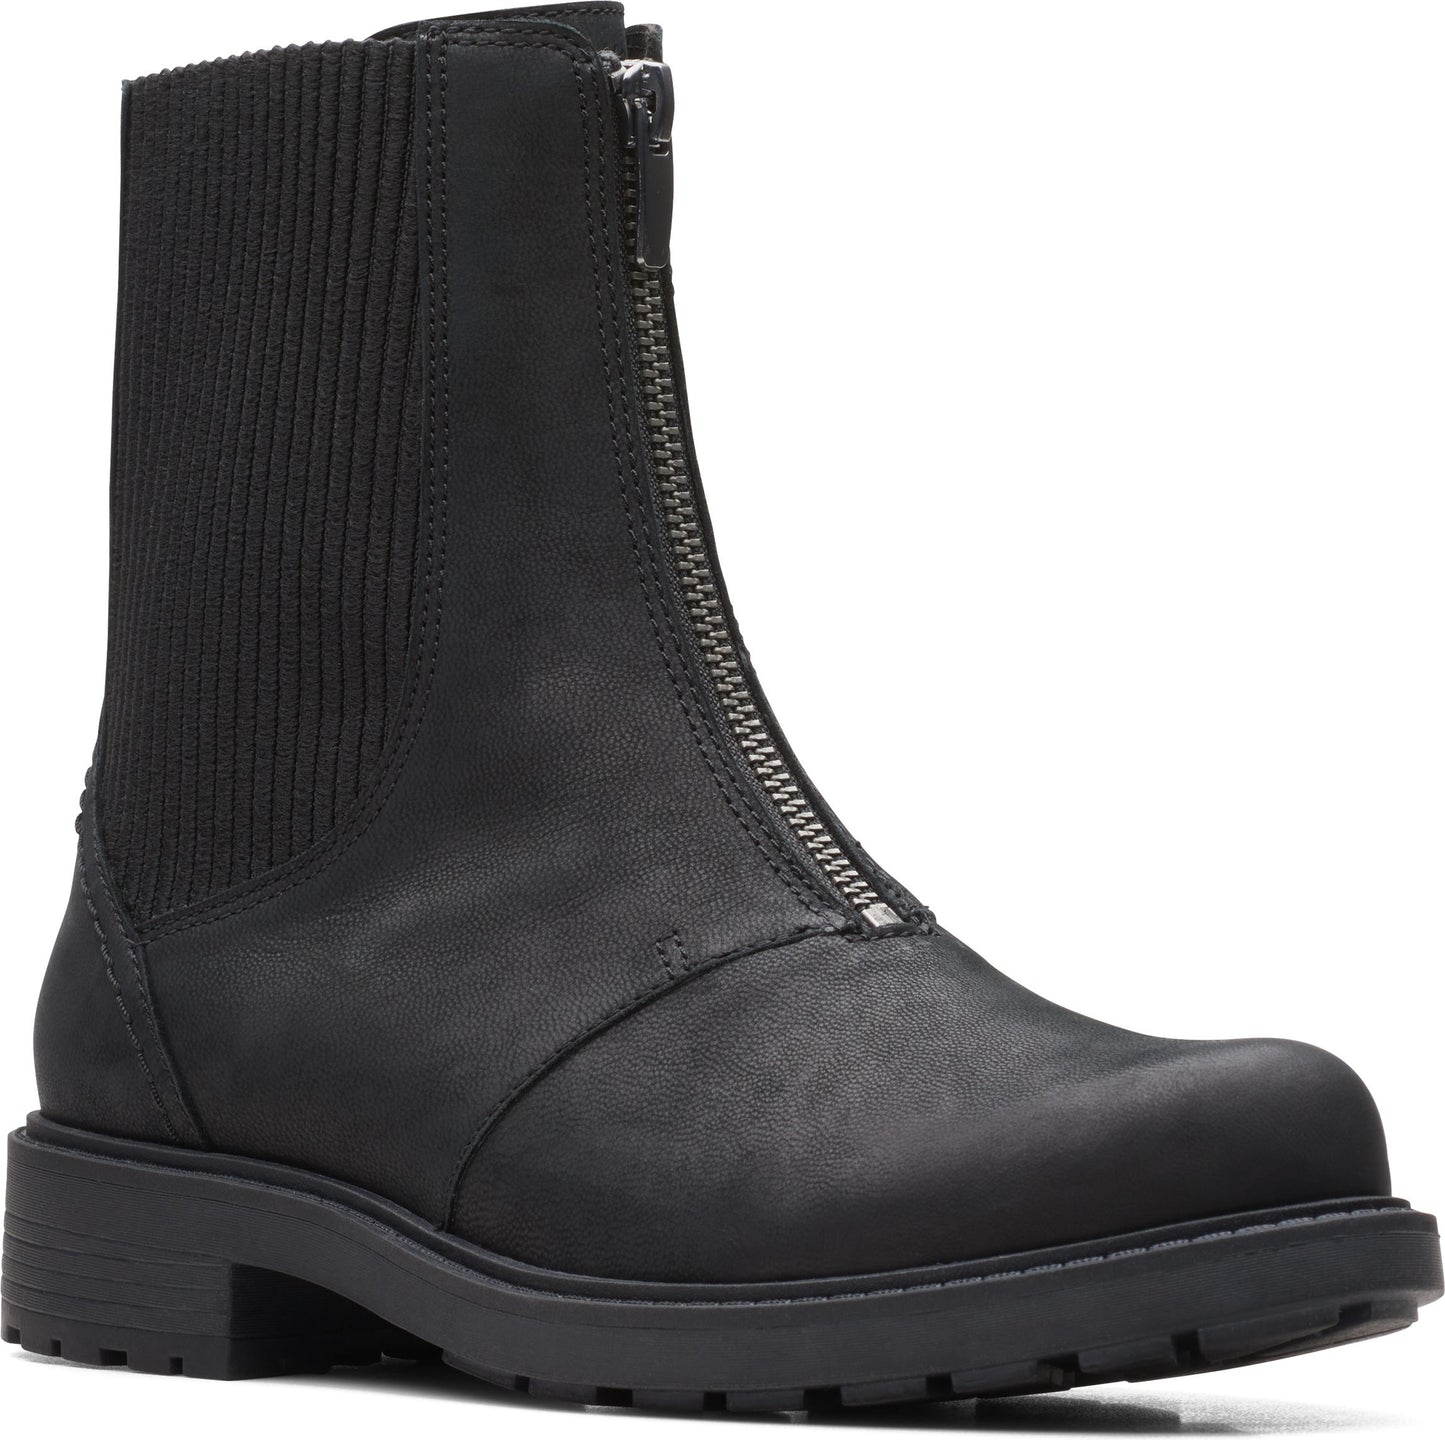 Clarks Boots Orinoco2 Up Black